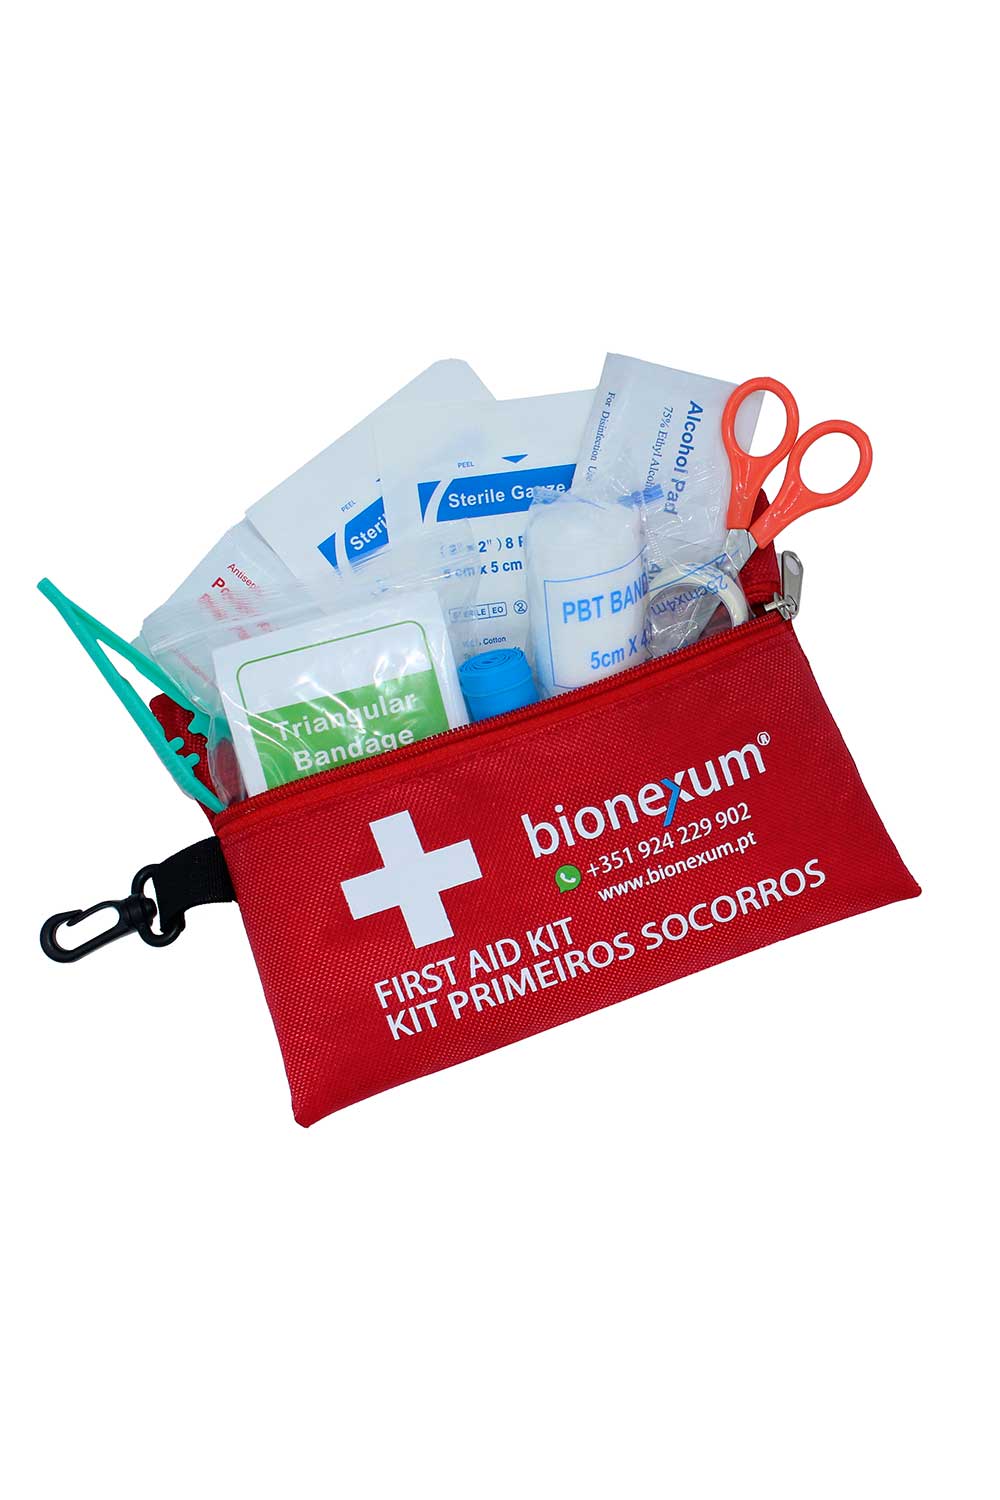 Kit Primeiros Socorros - Bionexum Dental Solutions